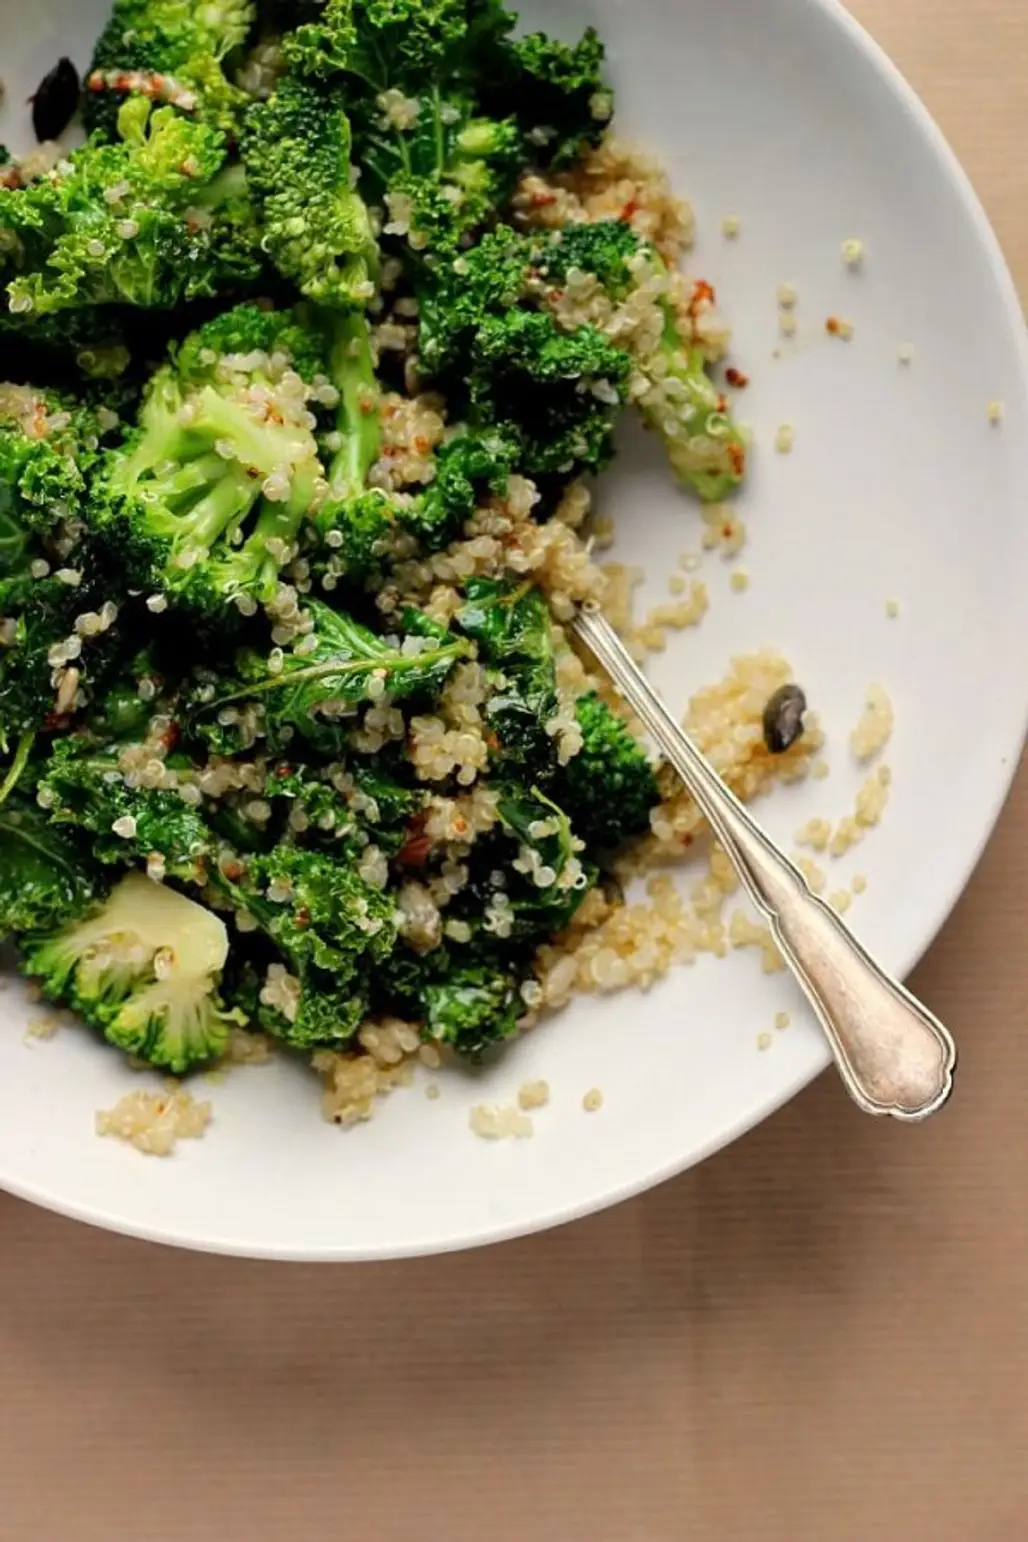 Warm Kale, Quinoa Broccoli Salad with Cider Mustard Dressing